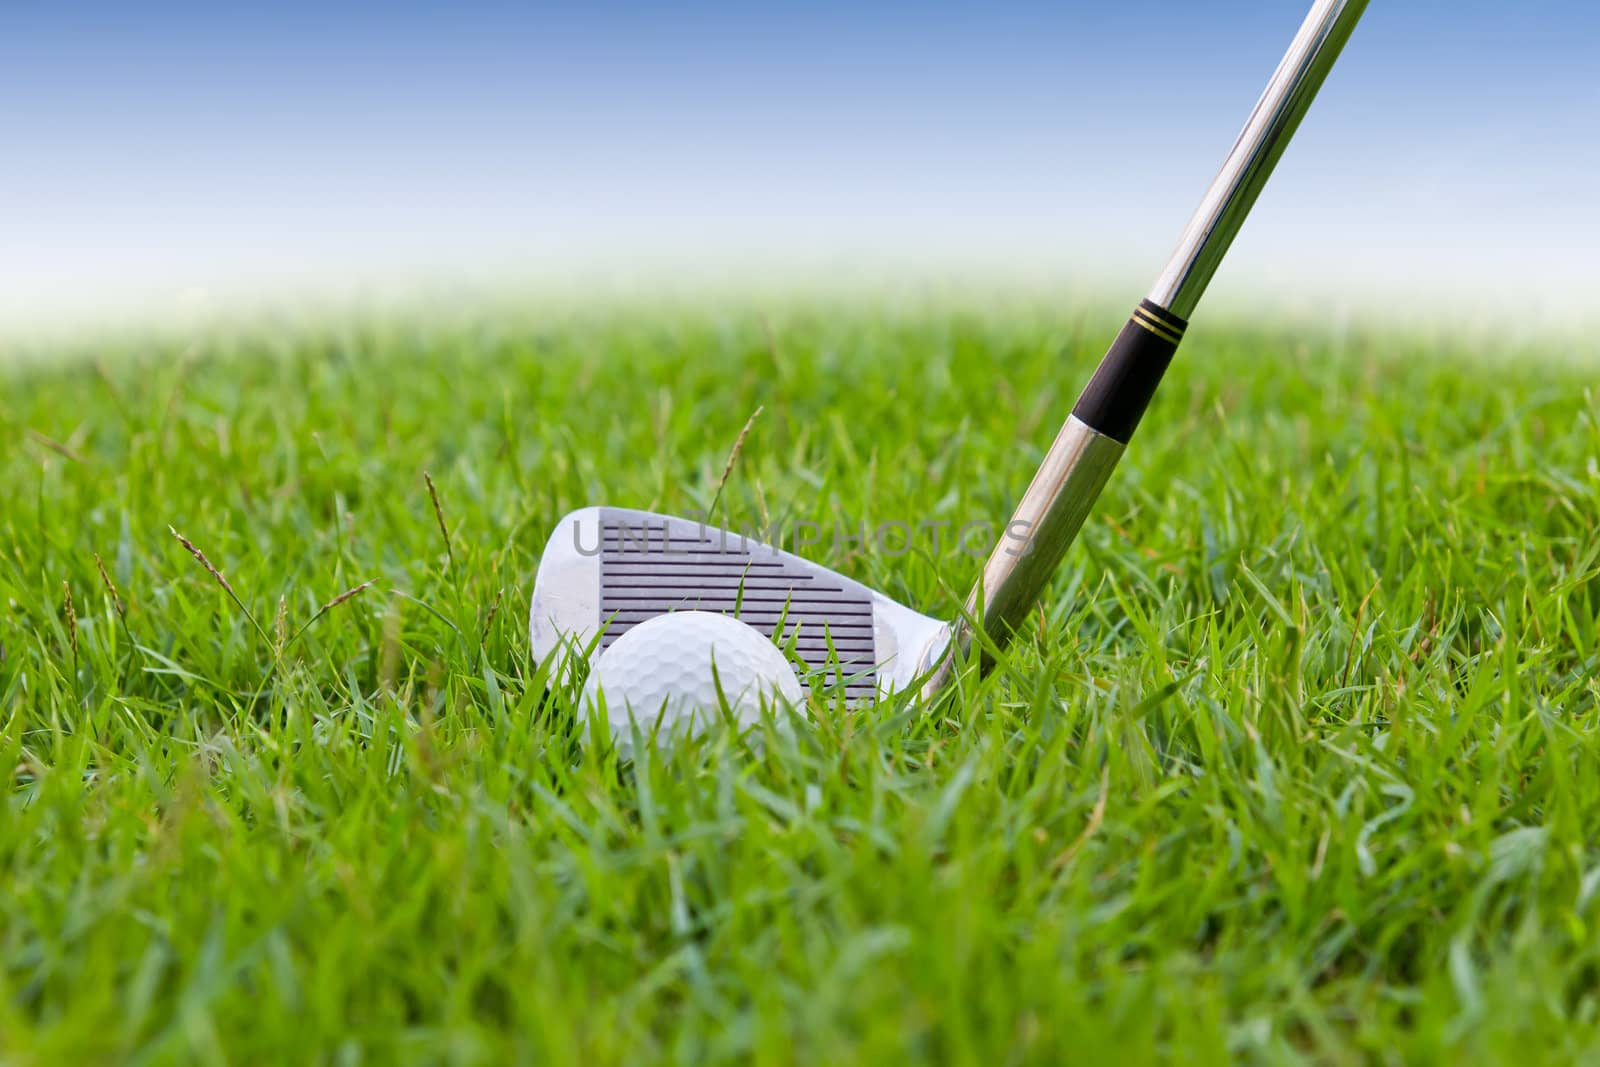 golf ball and iron on tall grass